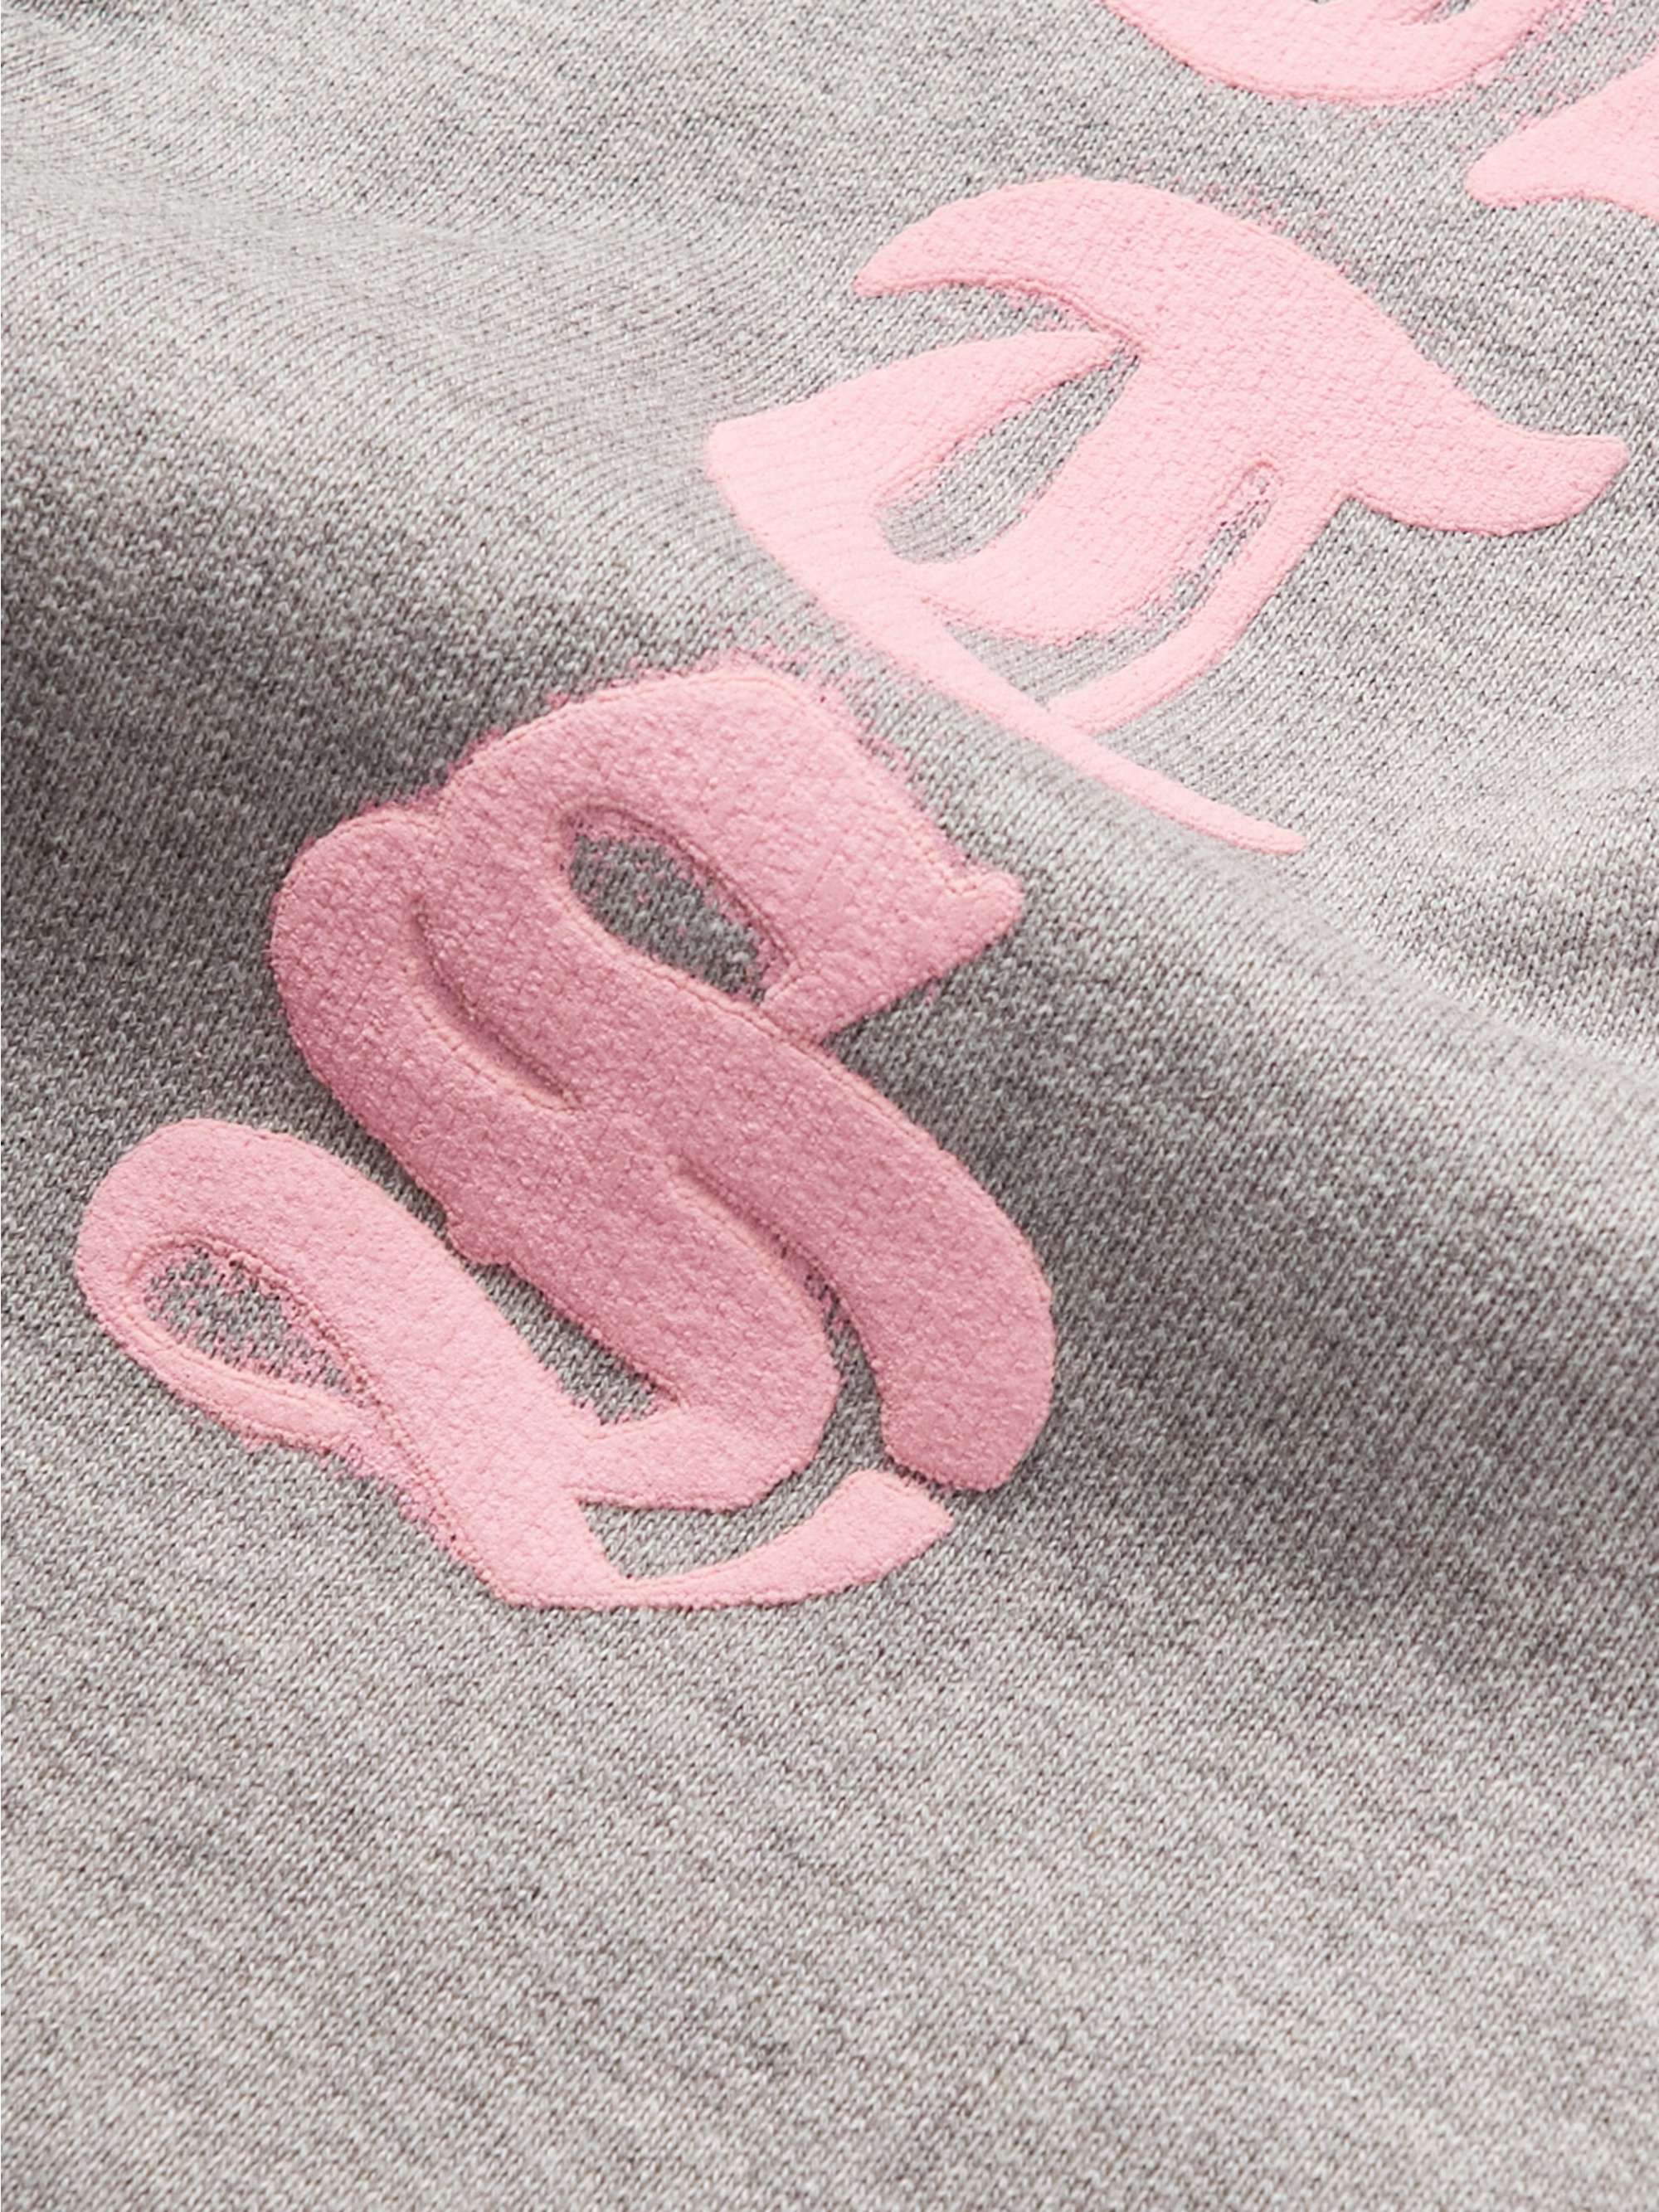 VETEMENTS Tapered Logo-Print Cotton-Blend Jersey Sweatpants